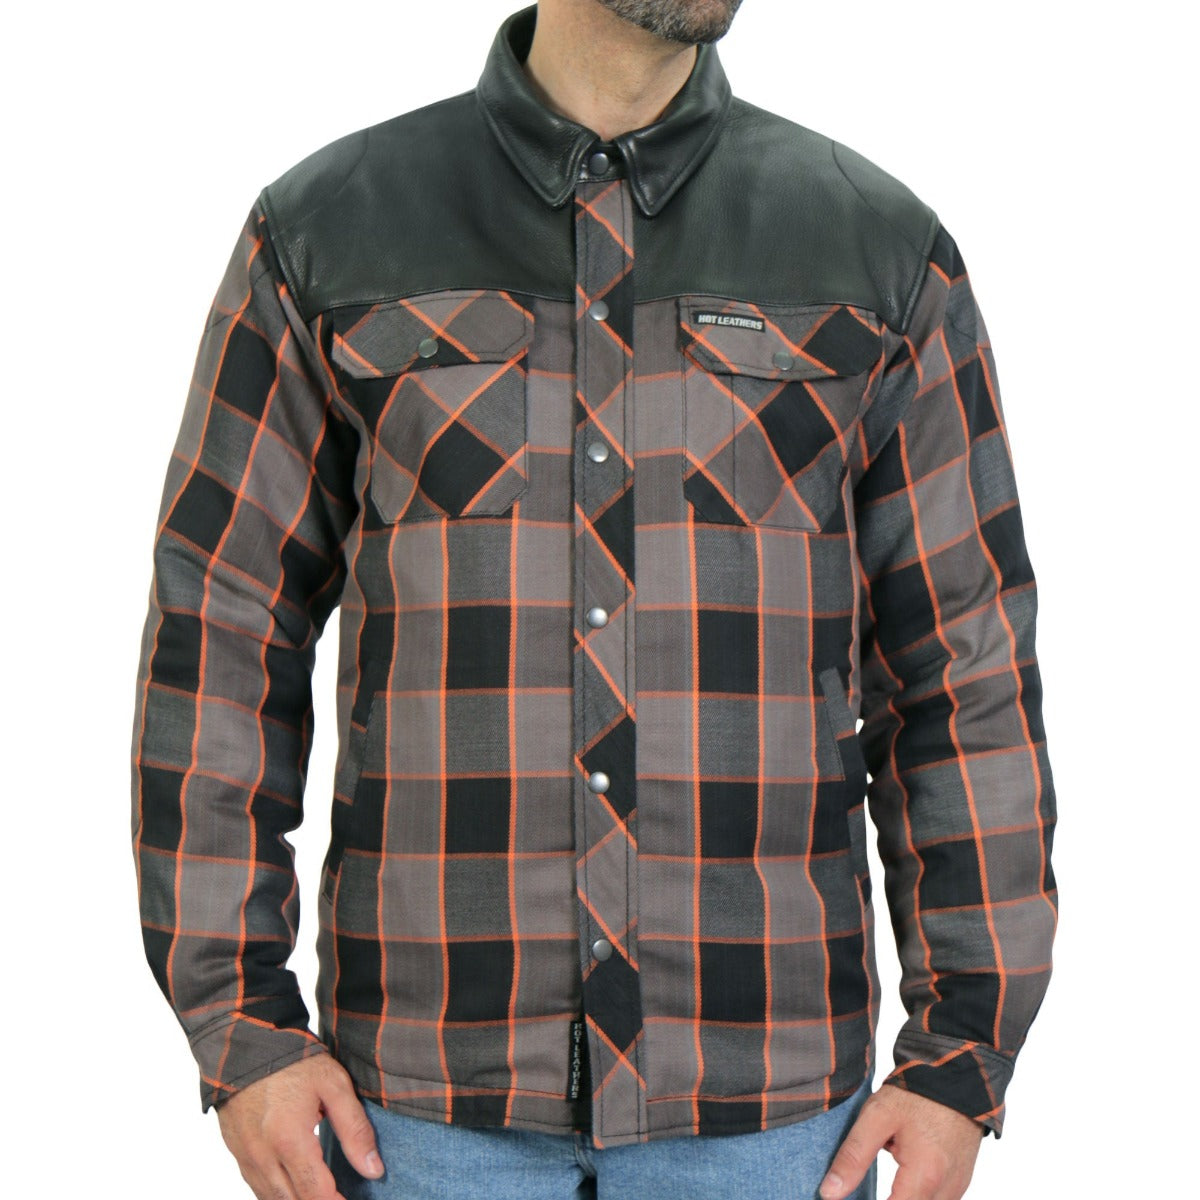 Hot Leathers Men's Kevlar Reinforced Leather Grey Black and Orange Flannel